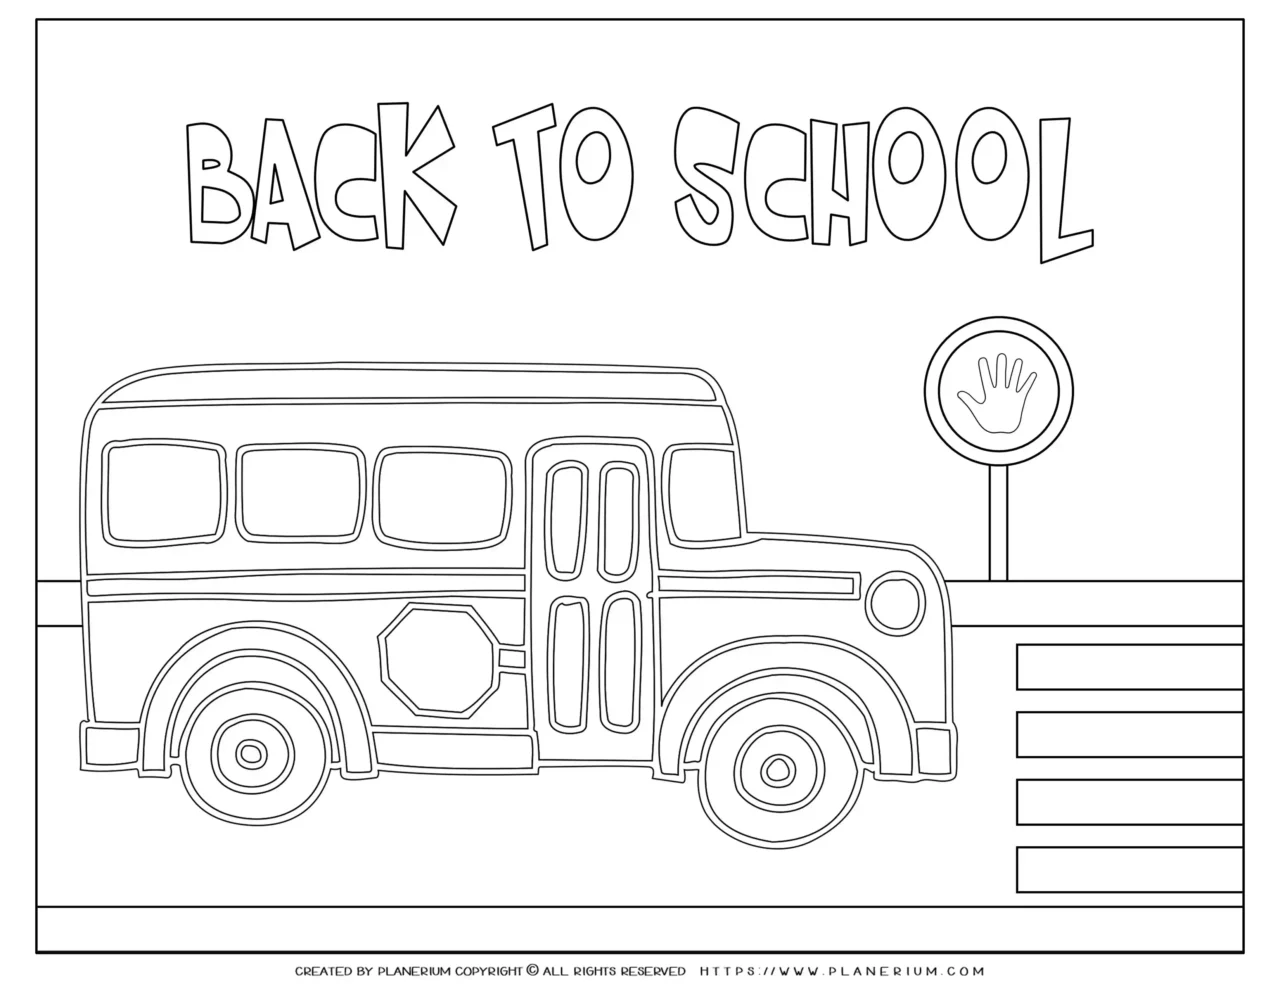 Back to School - Coloring Page - School Bus